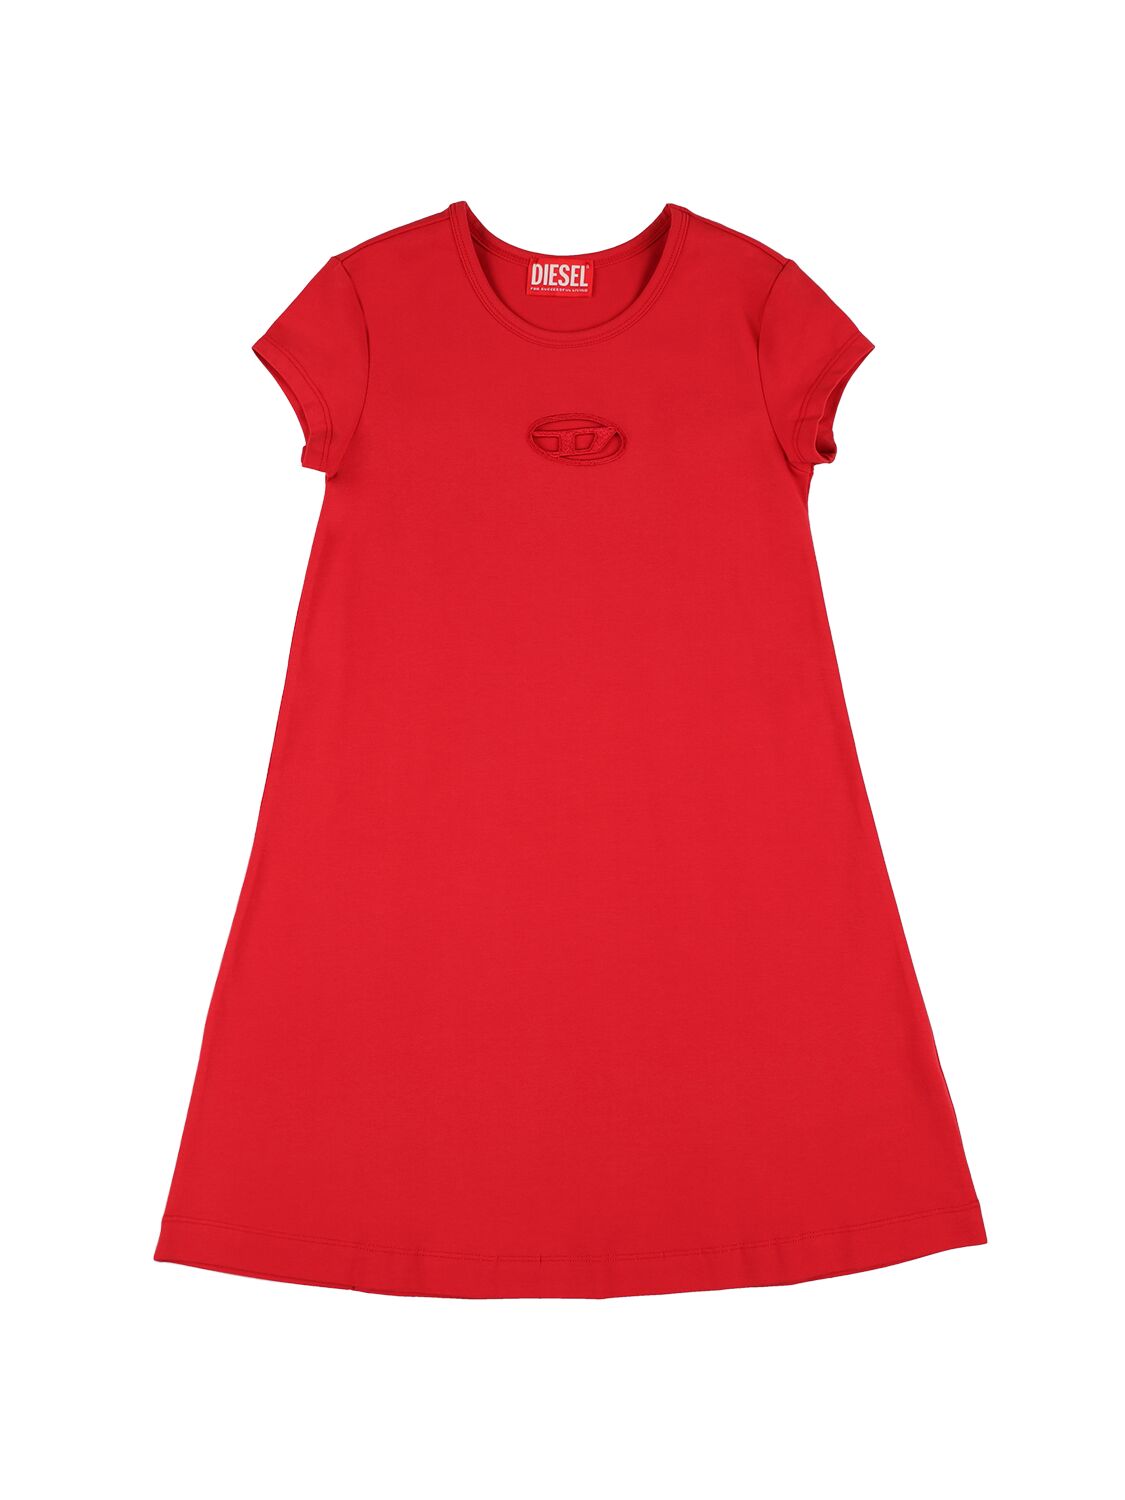 Diesel Kids' Cotton Jersey Dress In Red